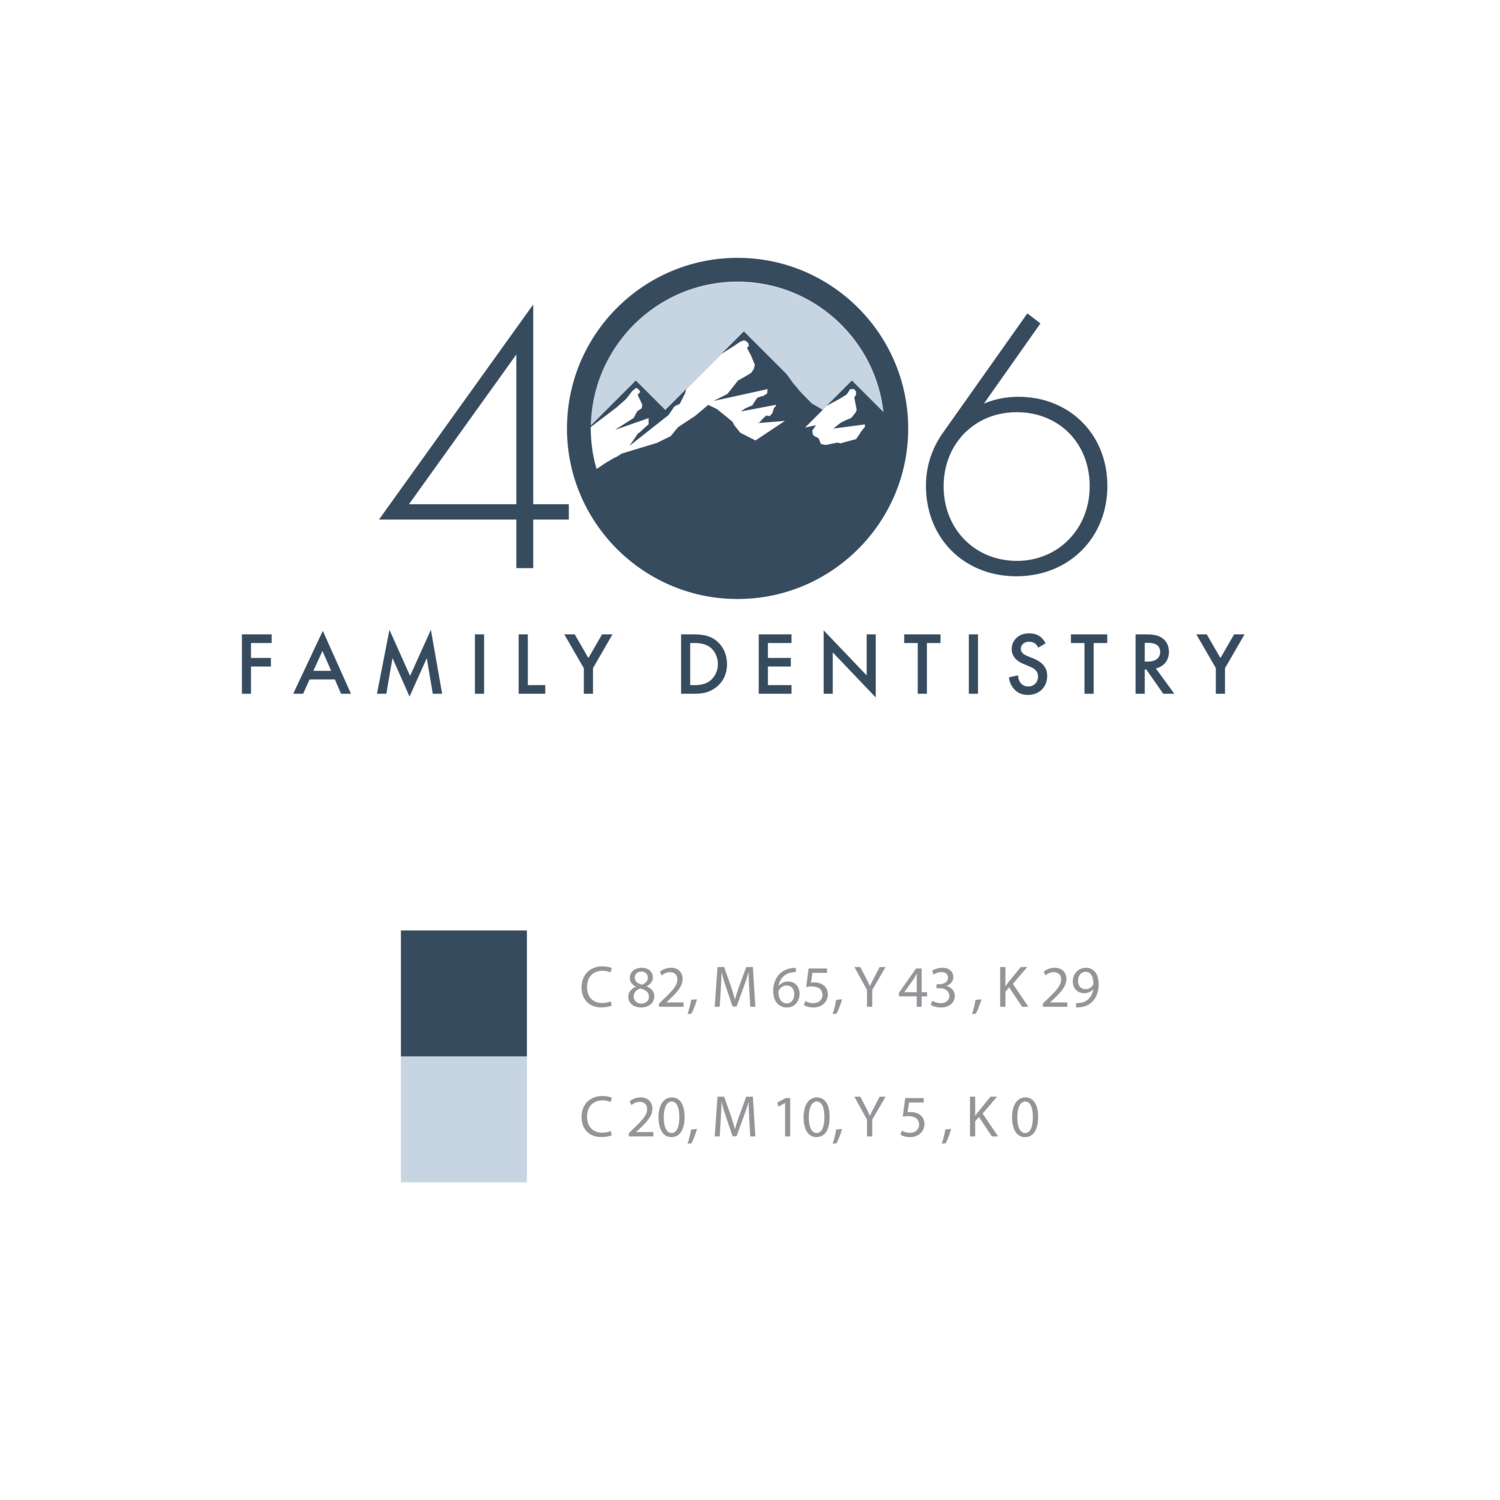 406+Dentistry+gallery1.png